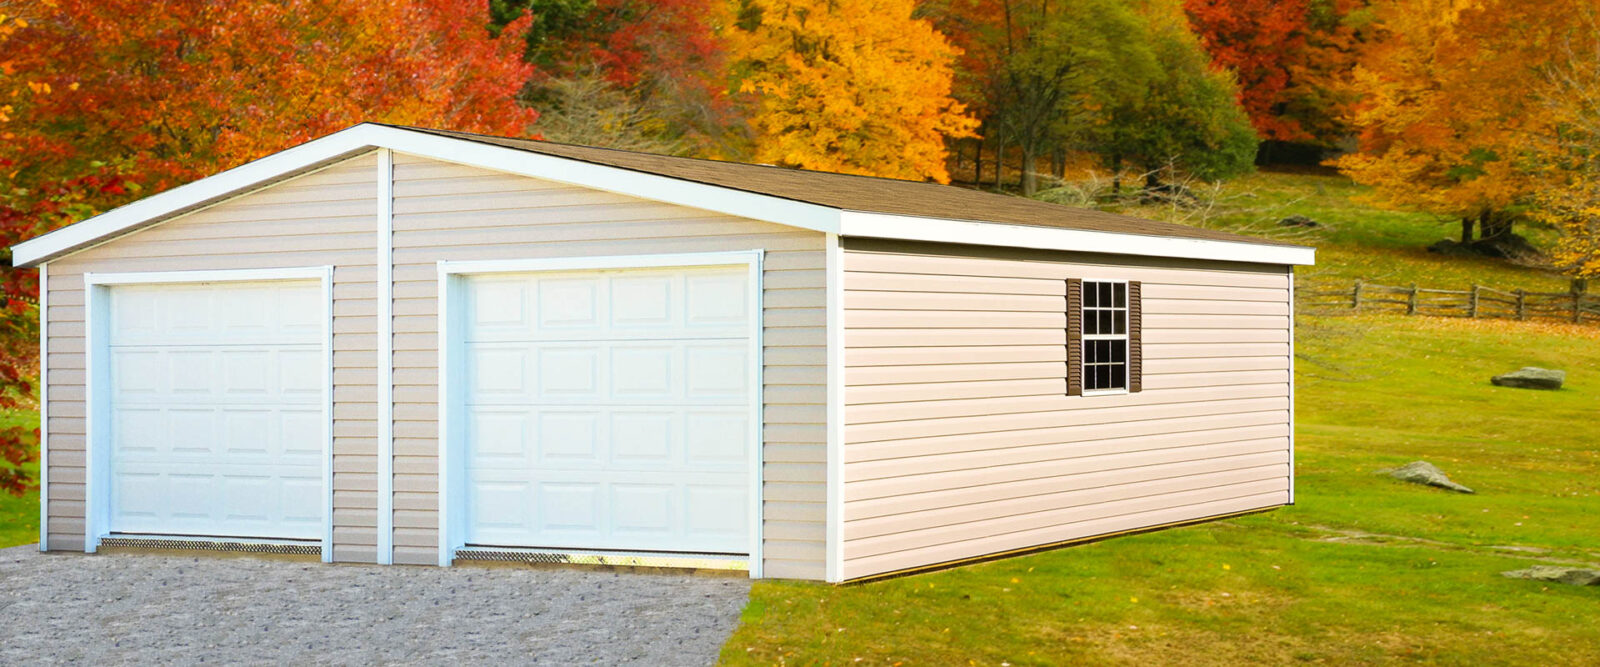 A double-wide modular garage.